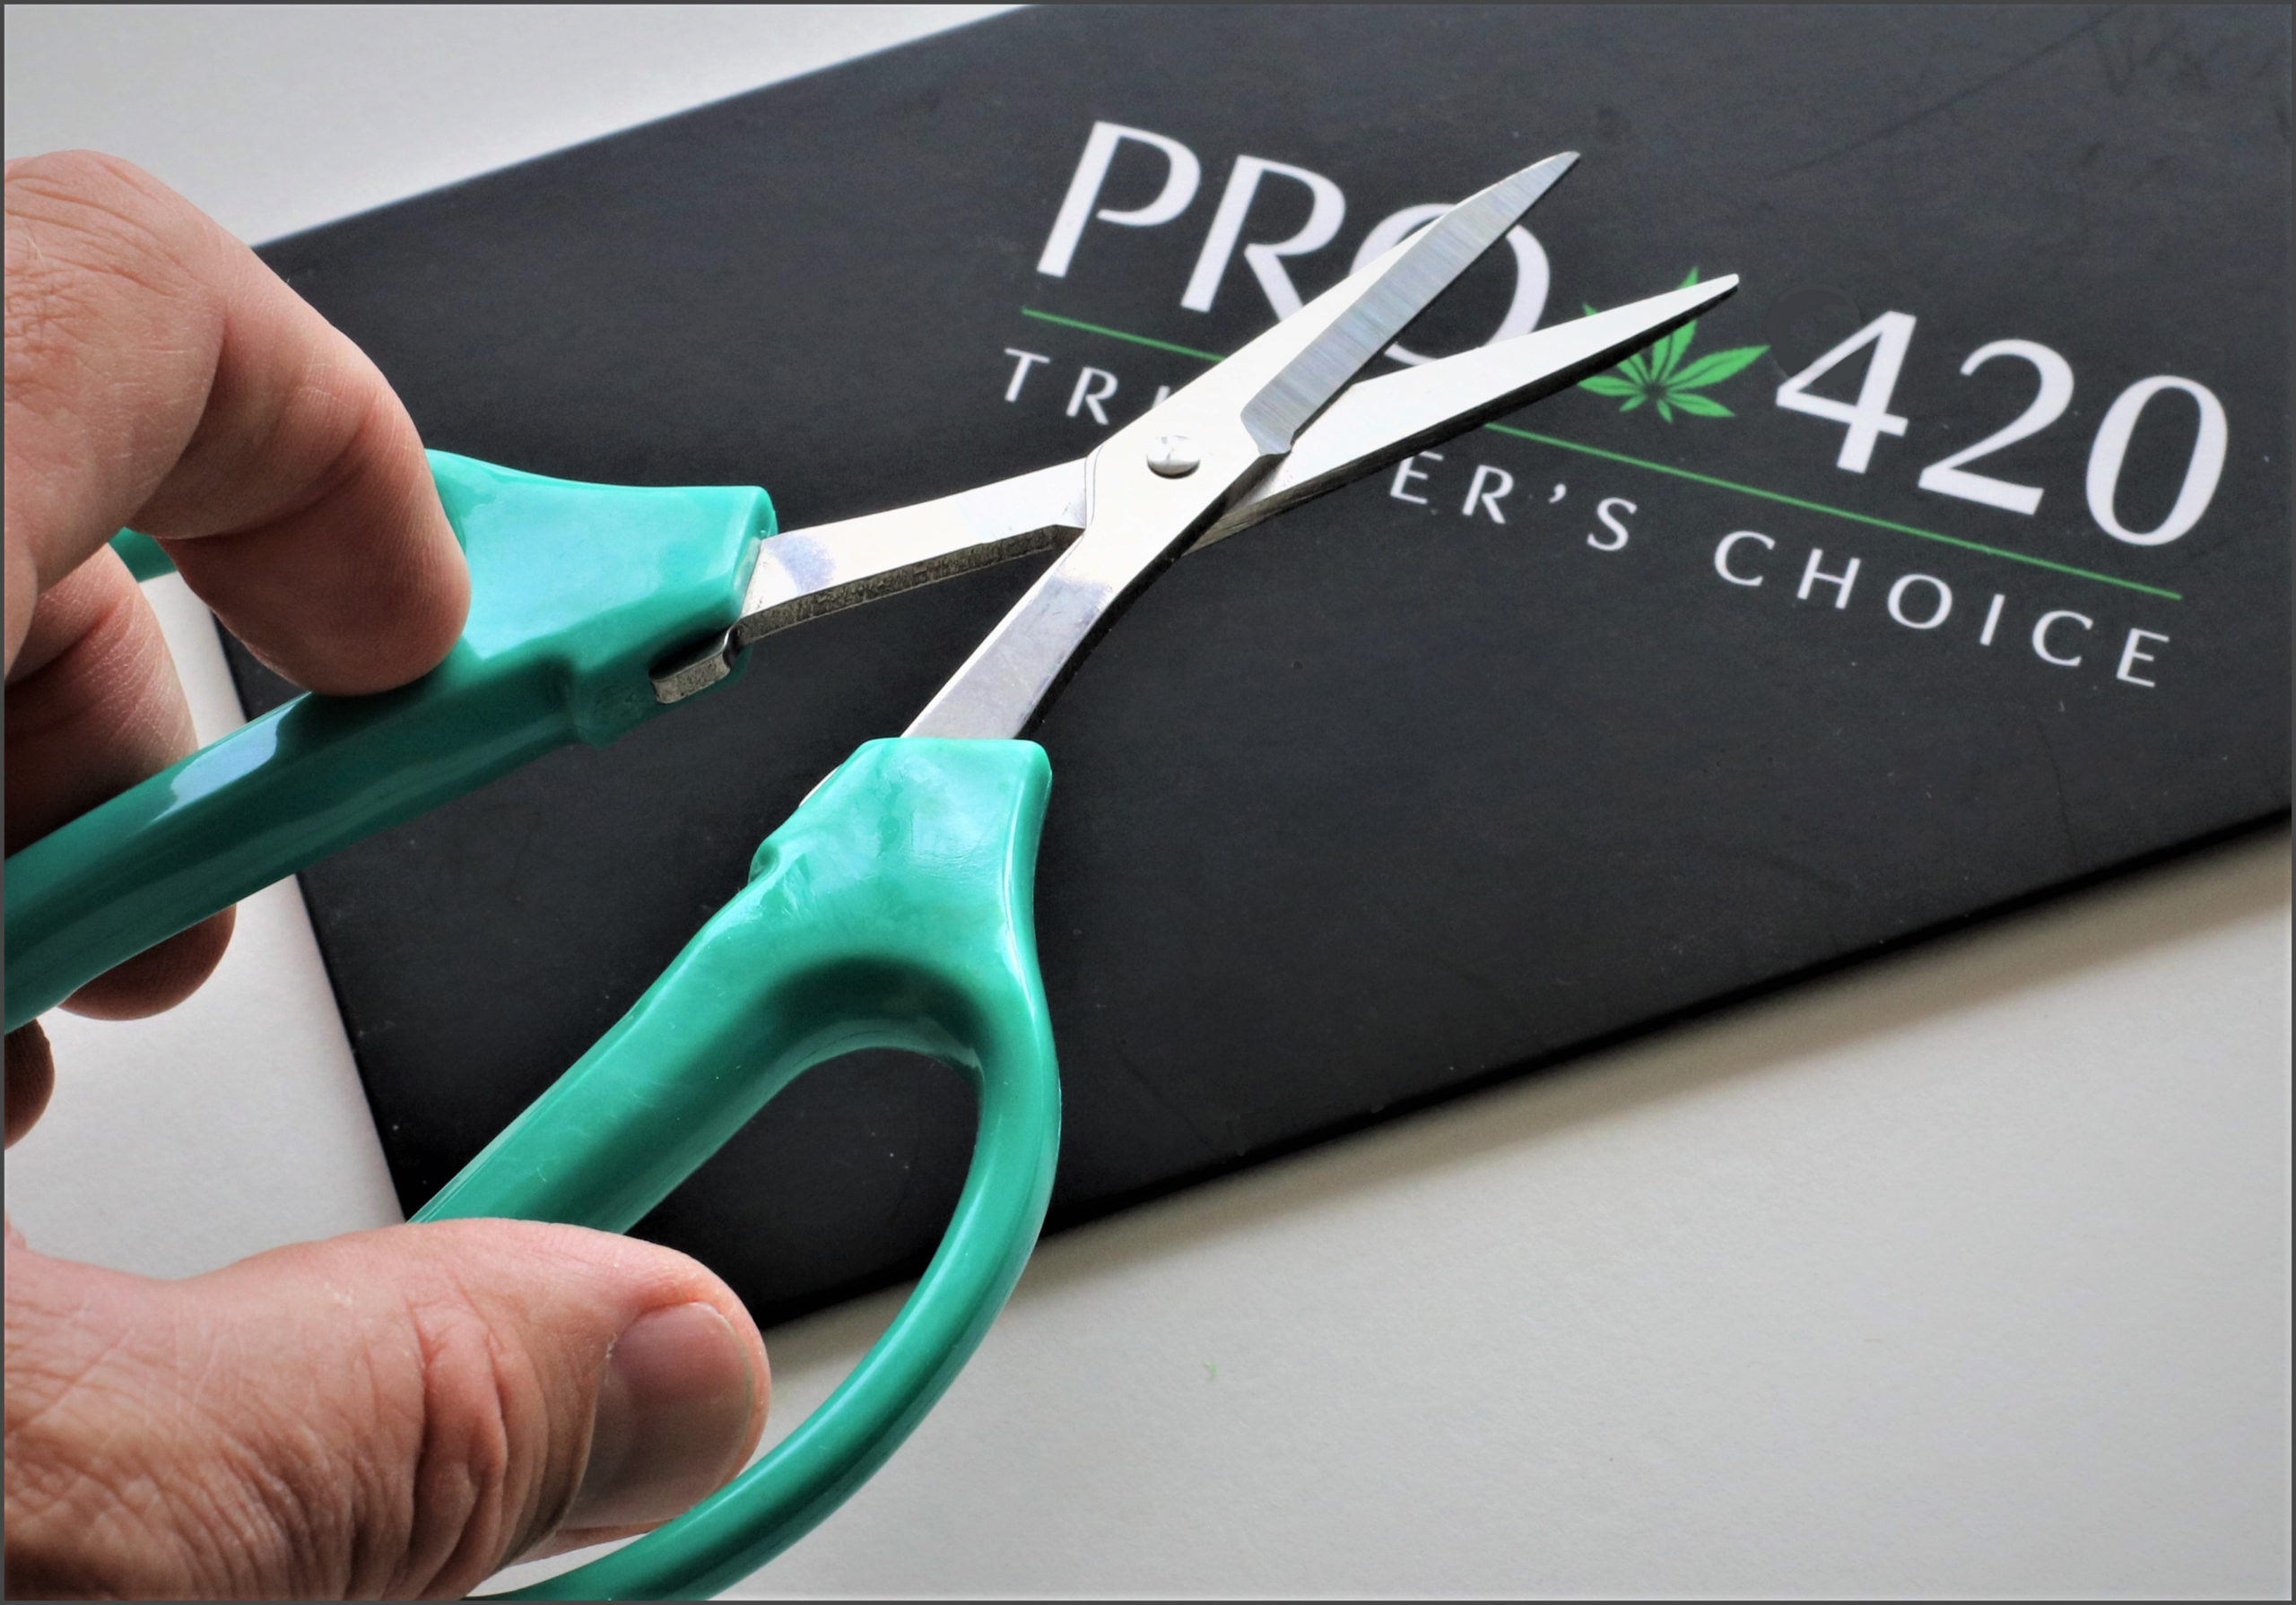 PRO 420 Silver Classic Scissors- 2 Pack PRO 420 Scissors - PRO 420